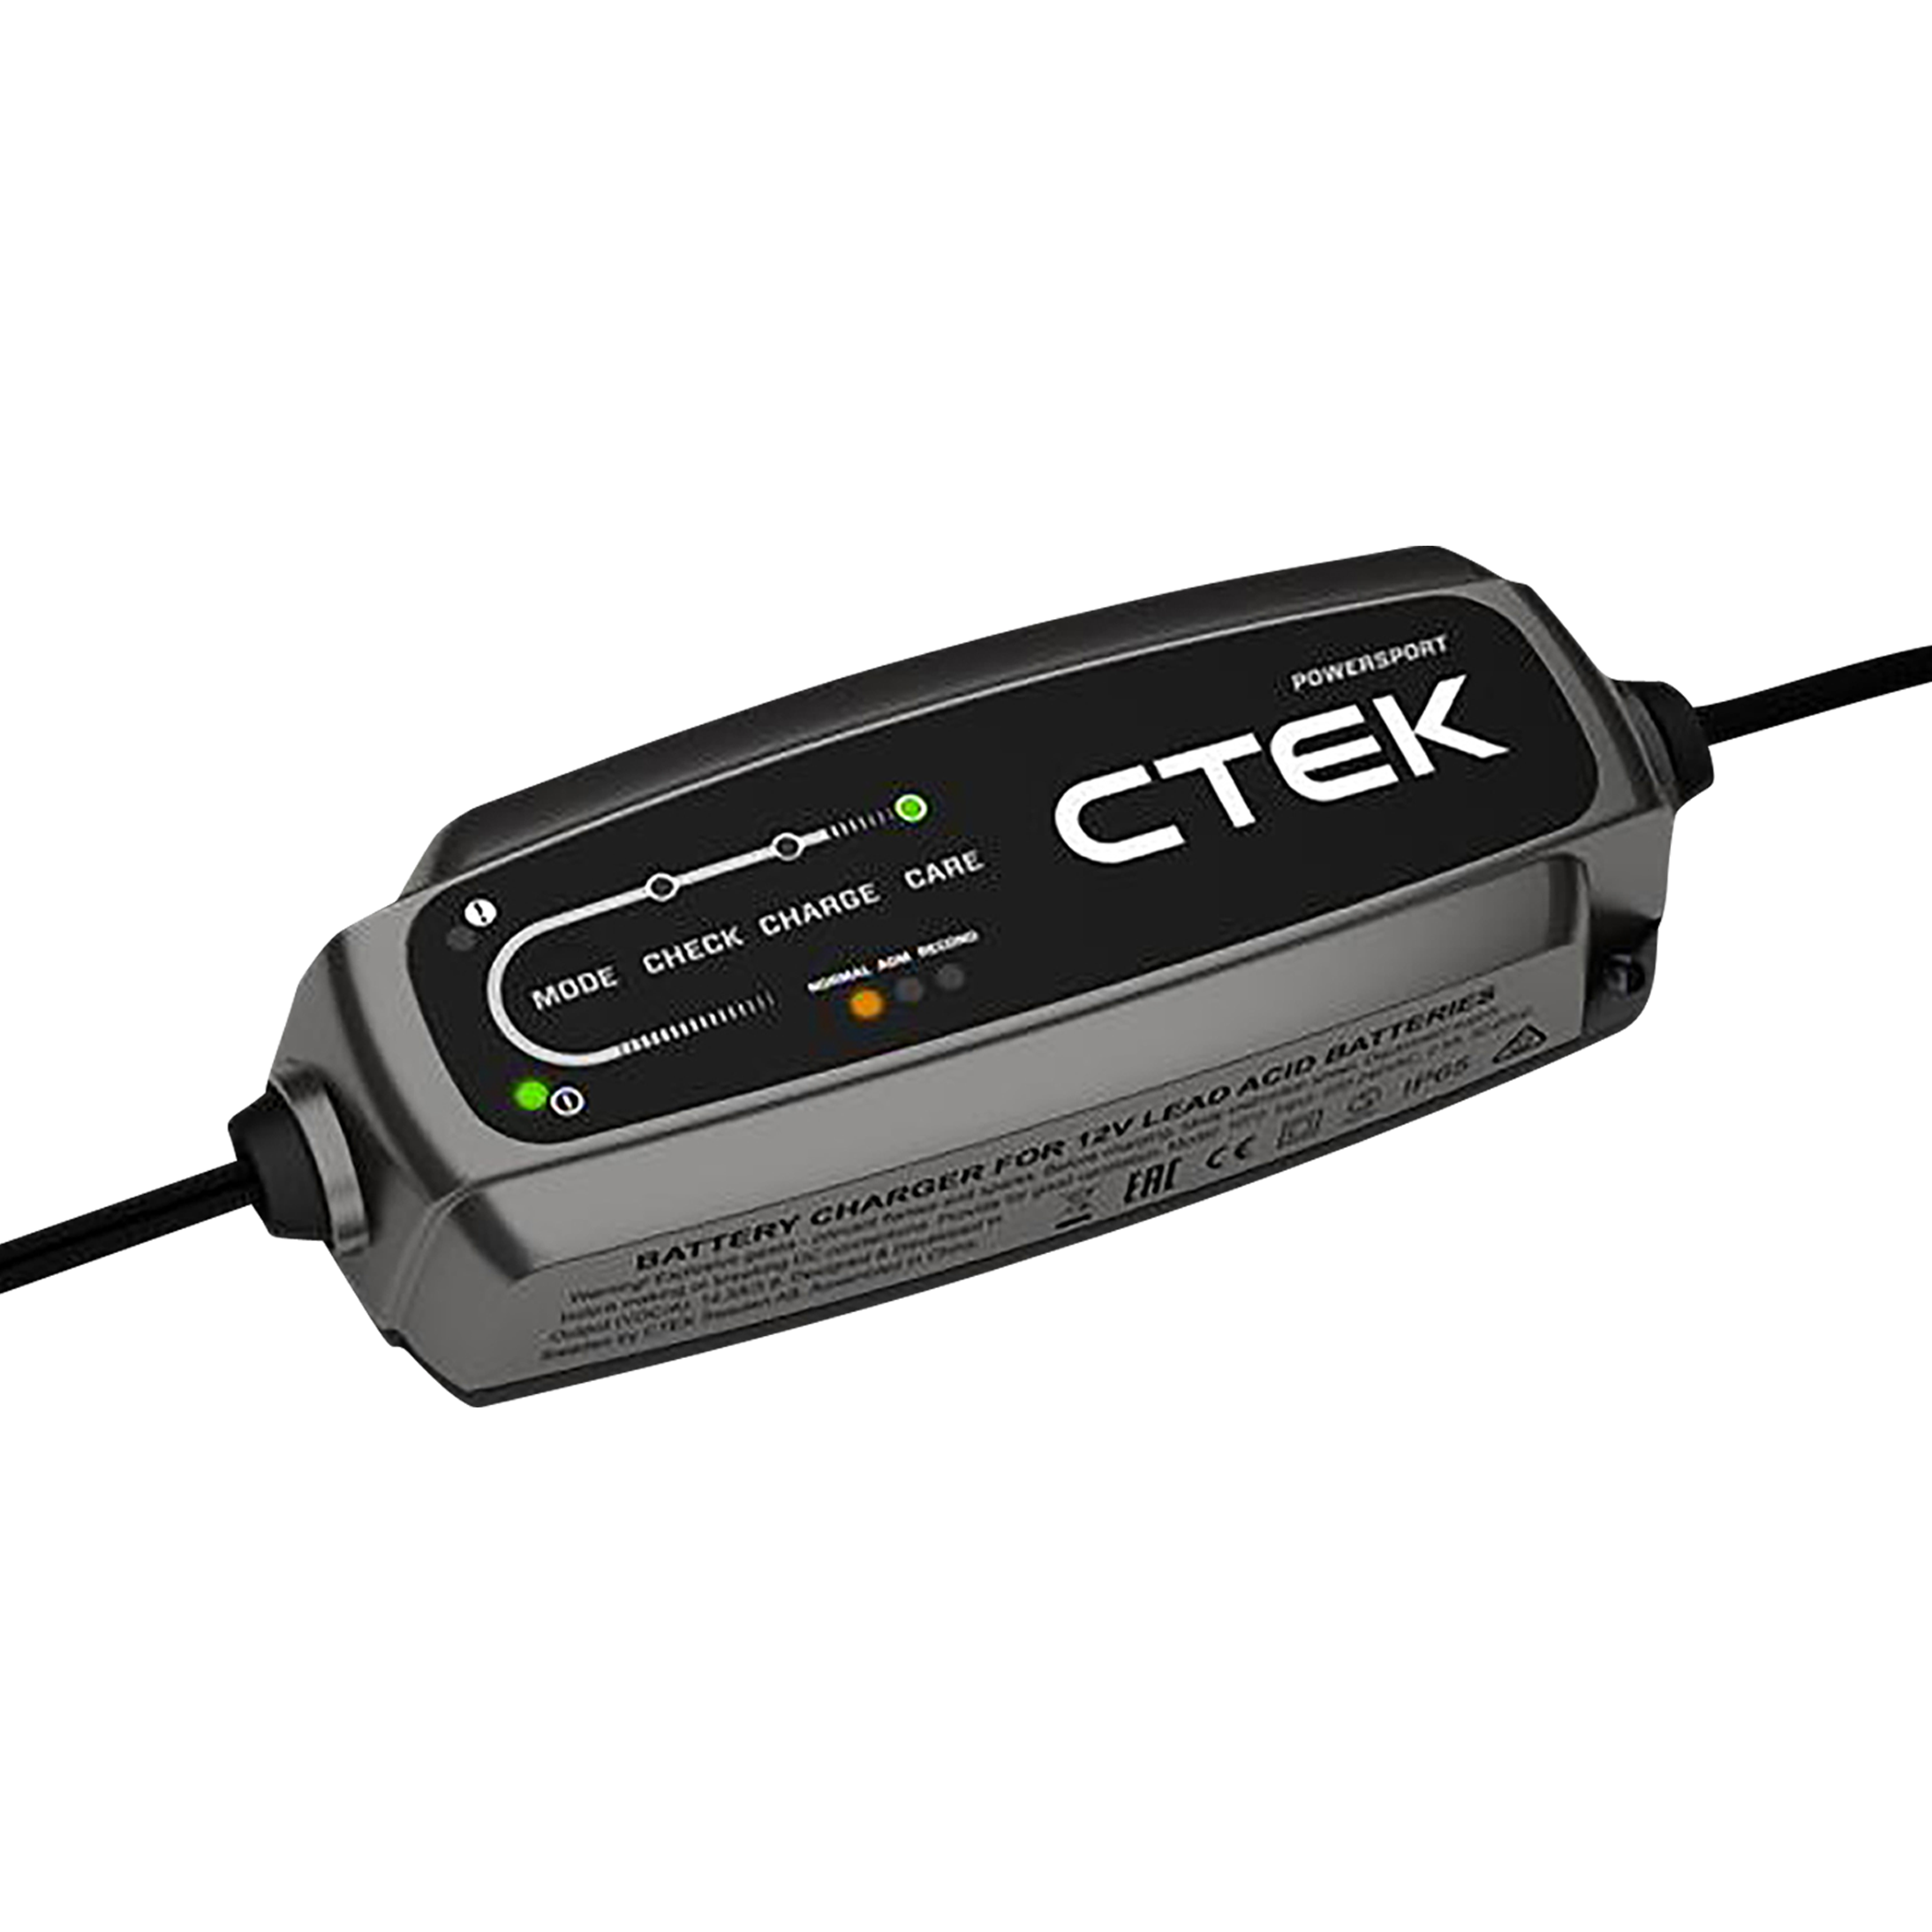 CTEK CT5 Powersport Lithium Battery Charger - Now 14% Savings